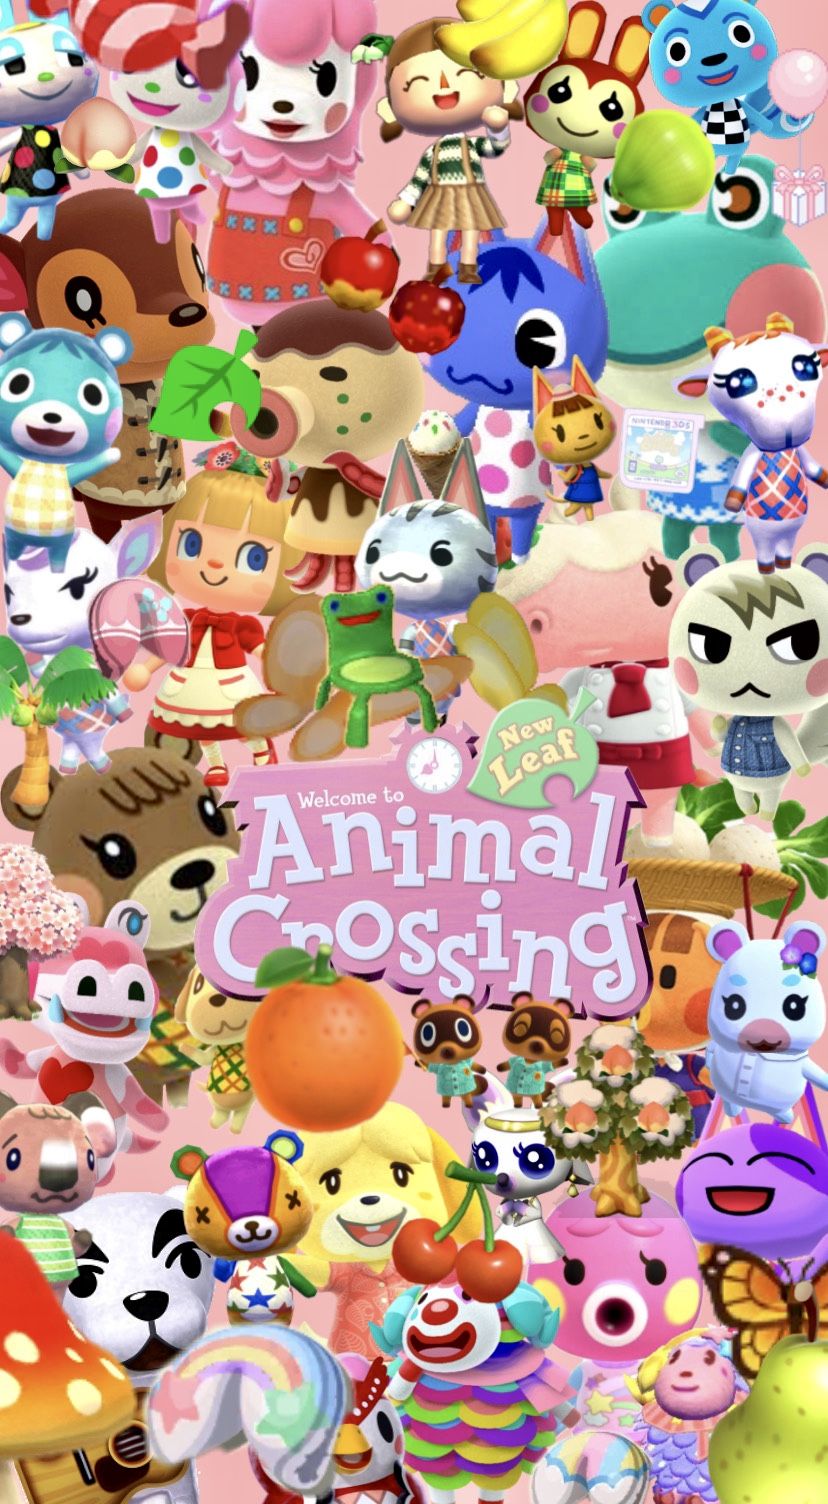 Animal crossing wallpaper. Animal crossing, Animal crossing game, New animal crossing